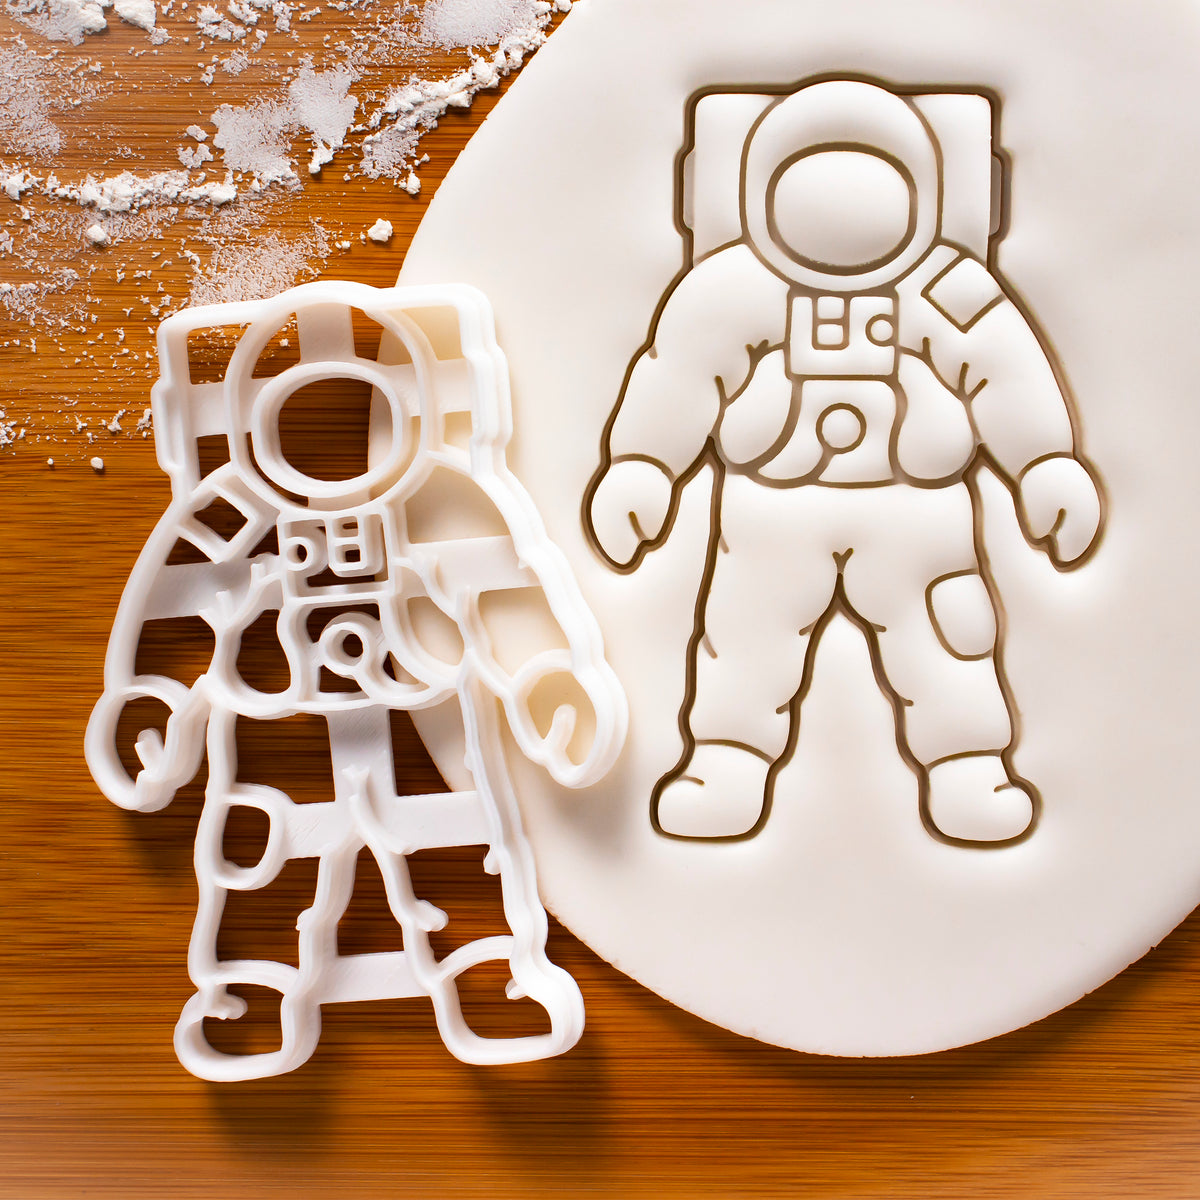 Astronaut - Space Cookie Cutter & Embosser Set — Sweet Savanna Cookie  Cutters